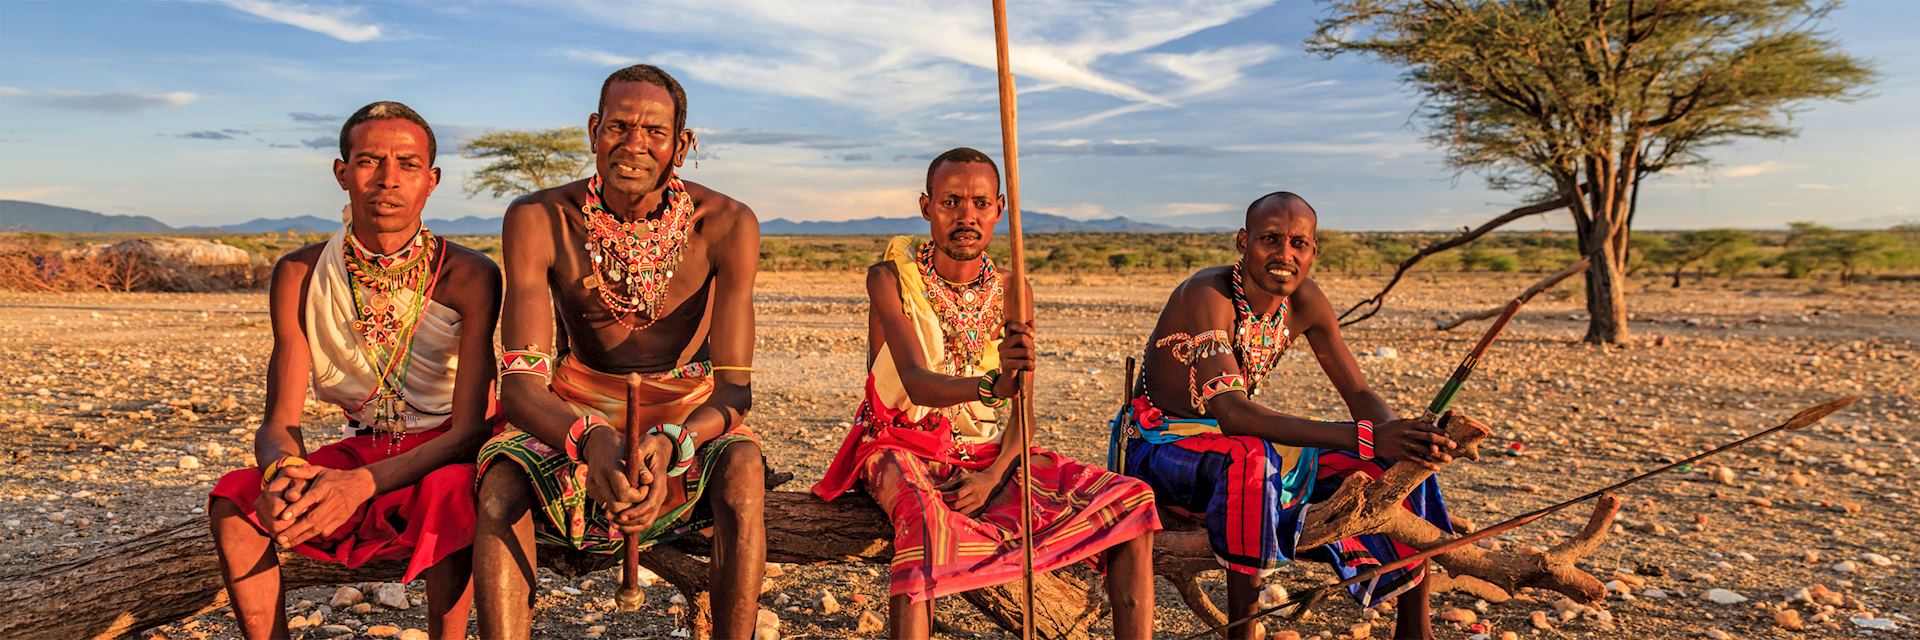 Samburu tribe in Northern Kenya